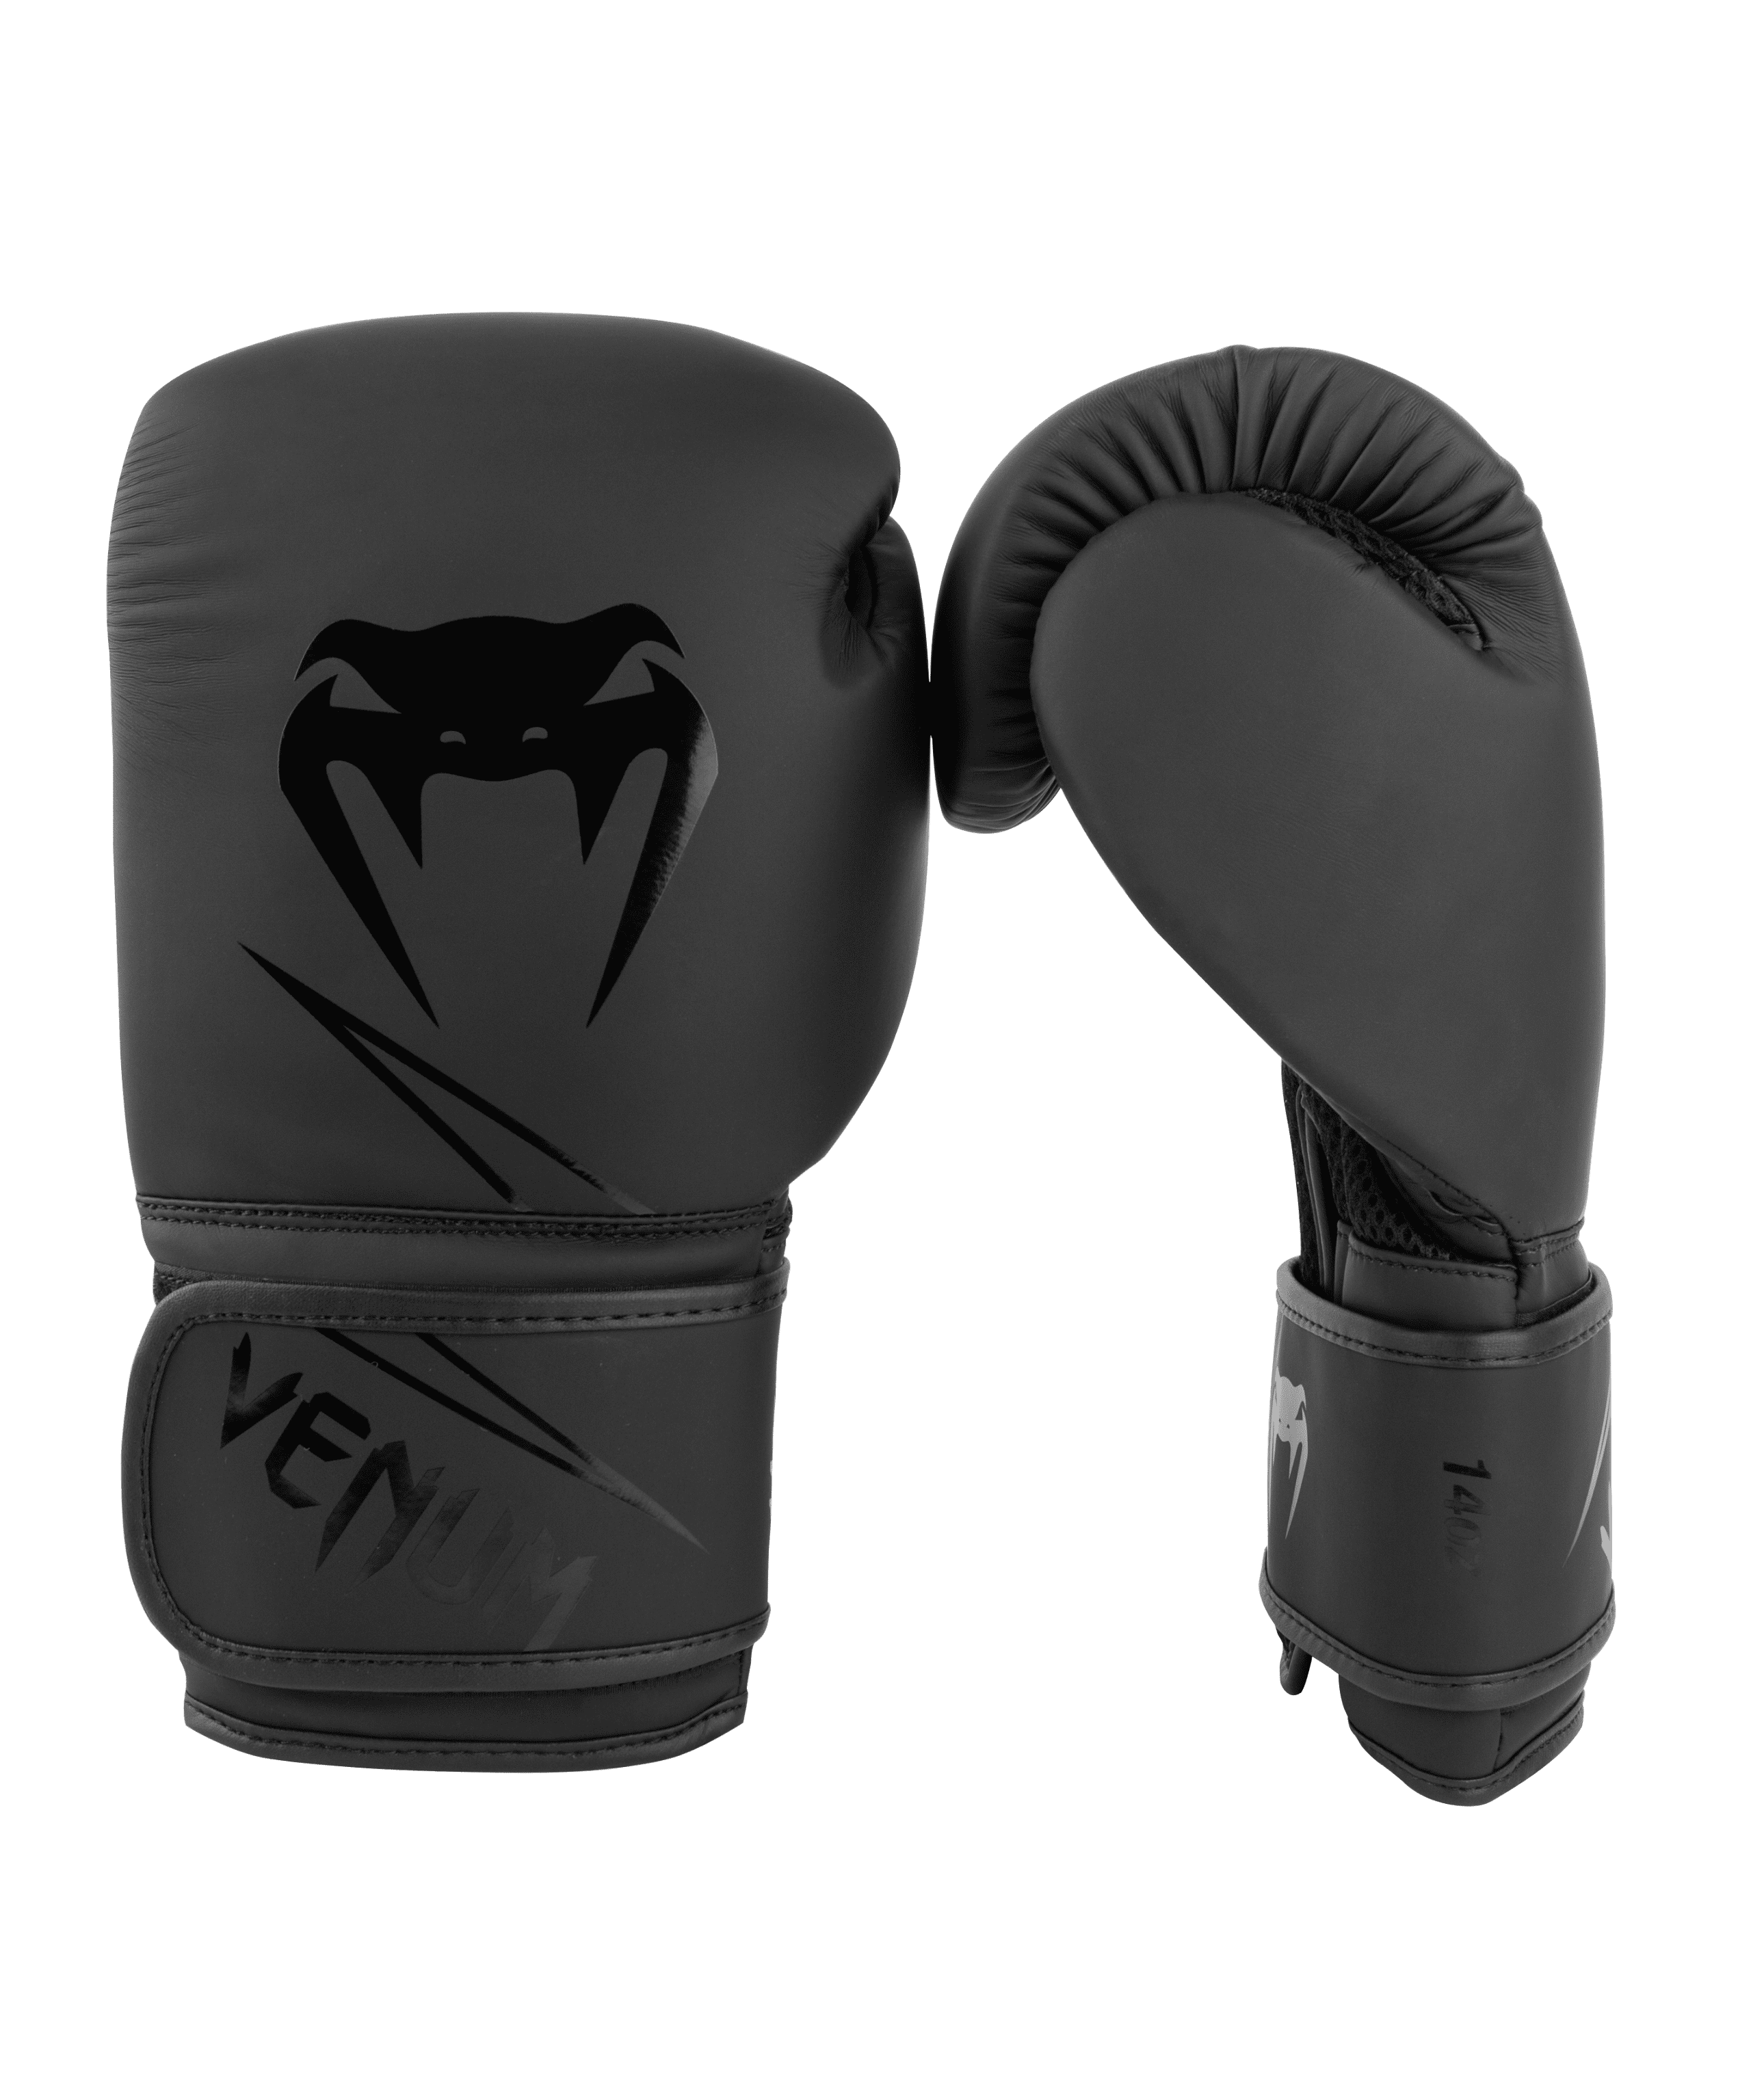 Venum Sharp Boxing Gloves Adult Sparring Muay Thai MMA Kickboxing 10 12 14 16oz 